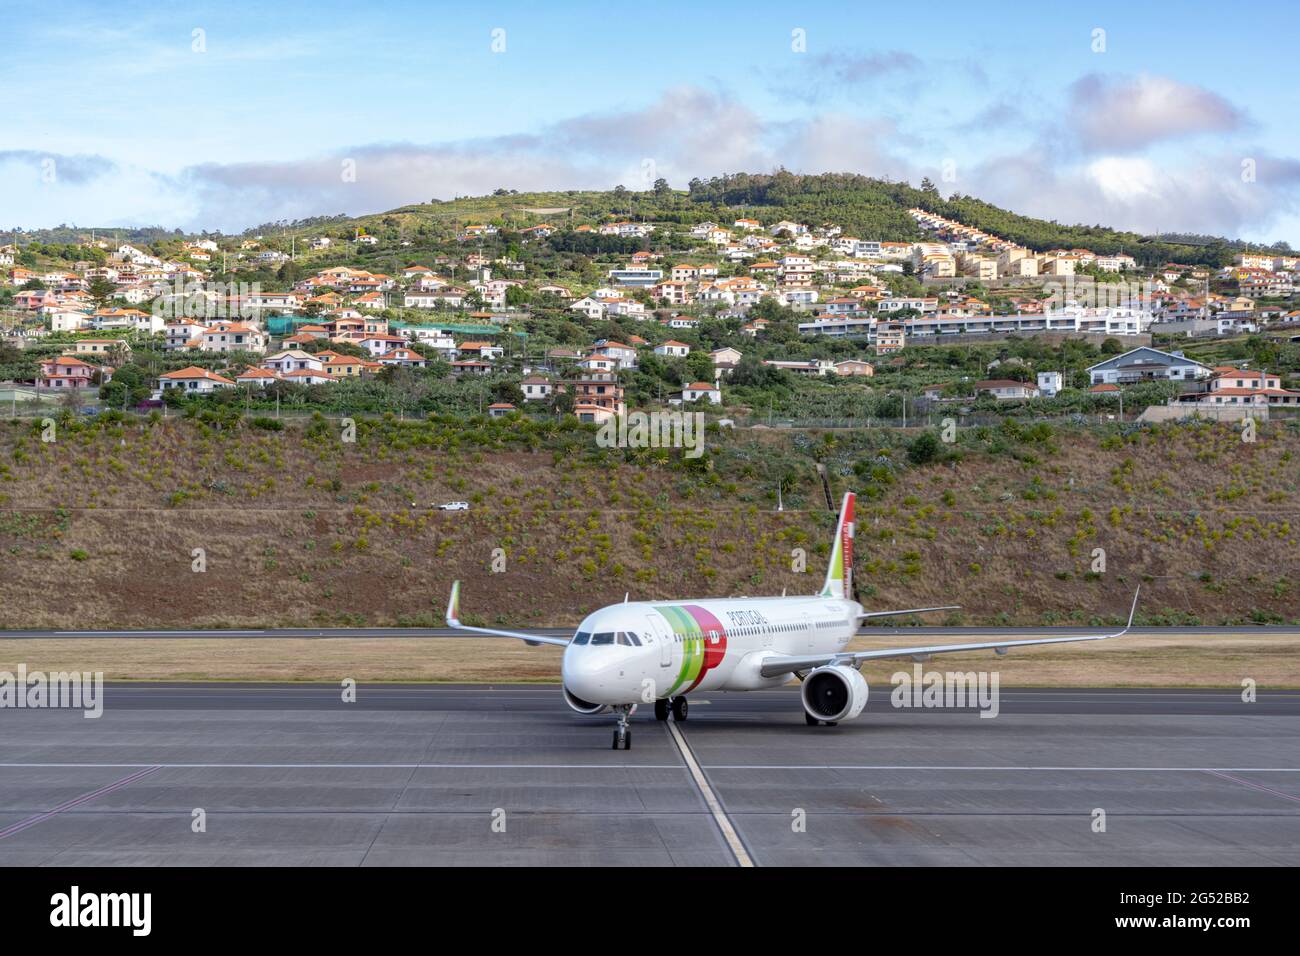 Passenger airplane ready to take off, Cristiano Ronaldo international airport, Funchal, Madeira island, Portugal Stock Photo